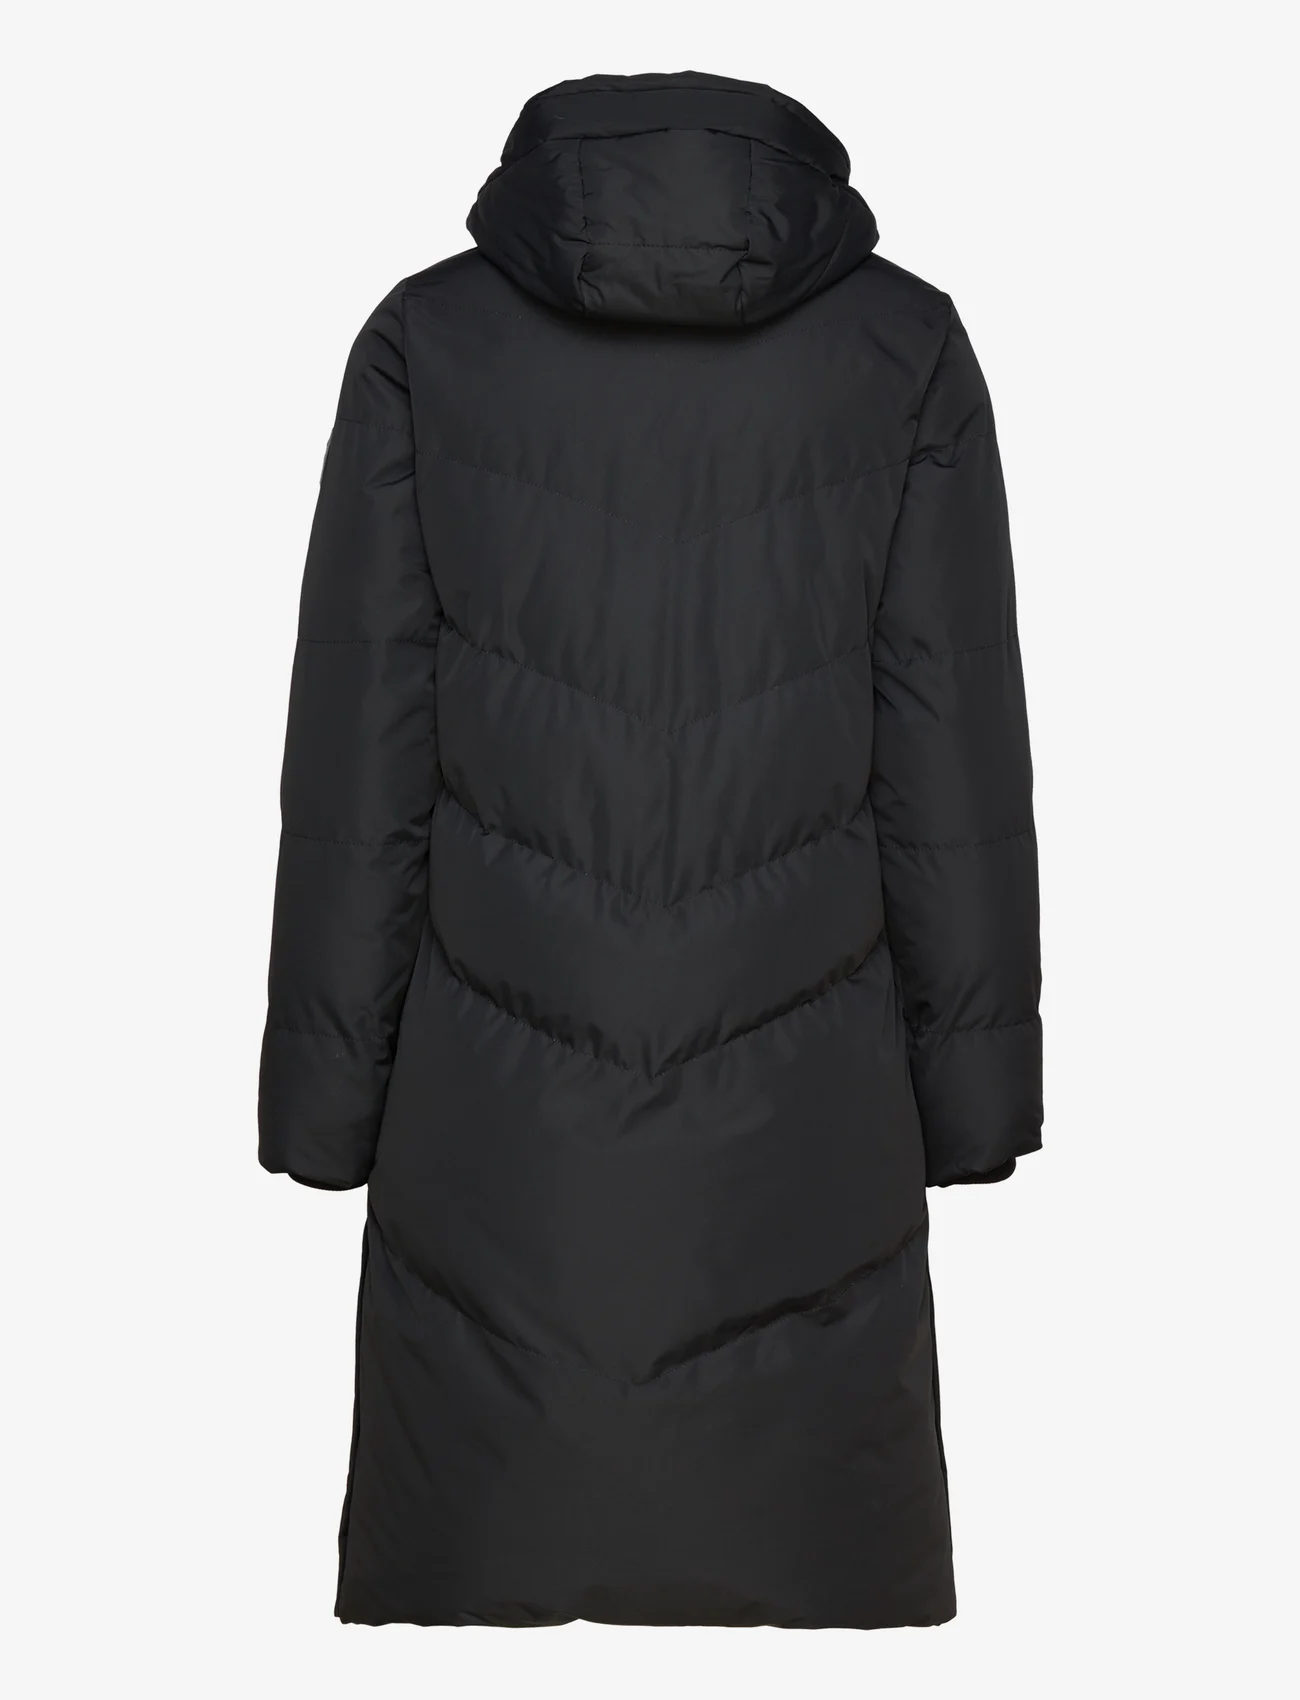 Garcia - ladies outdoor jackets - vinterjackor - black - 1